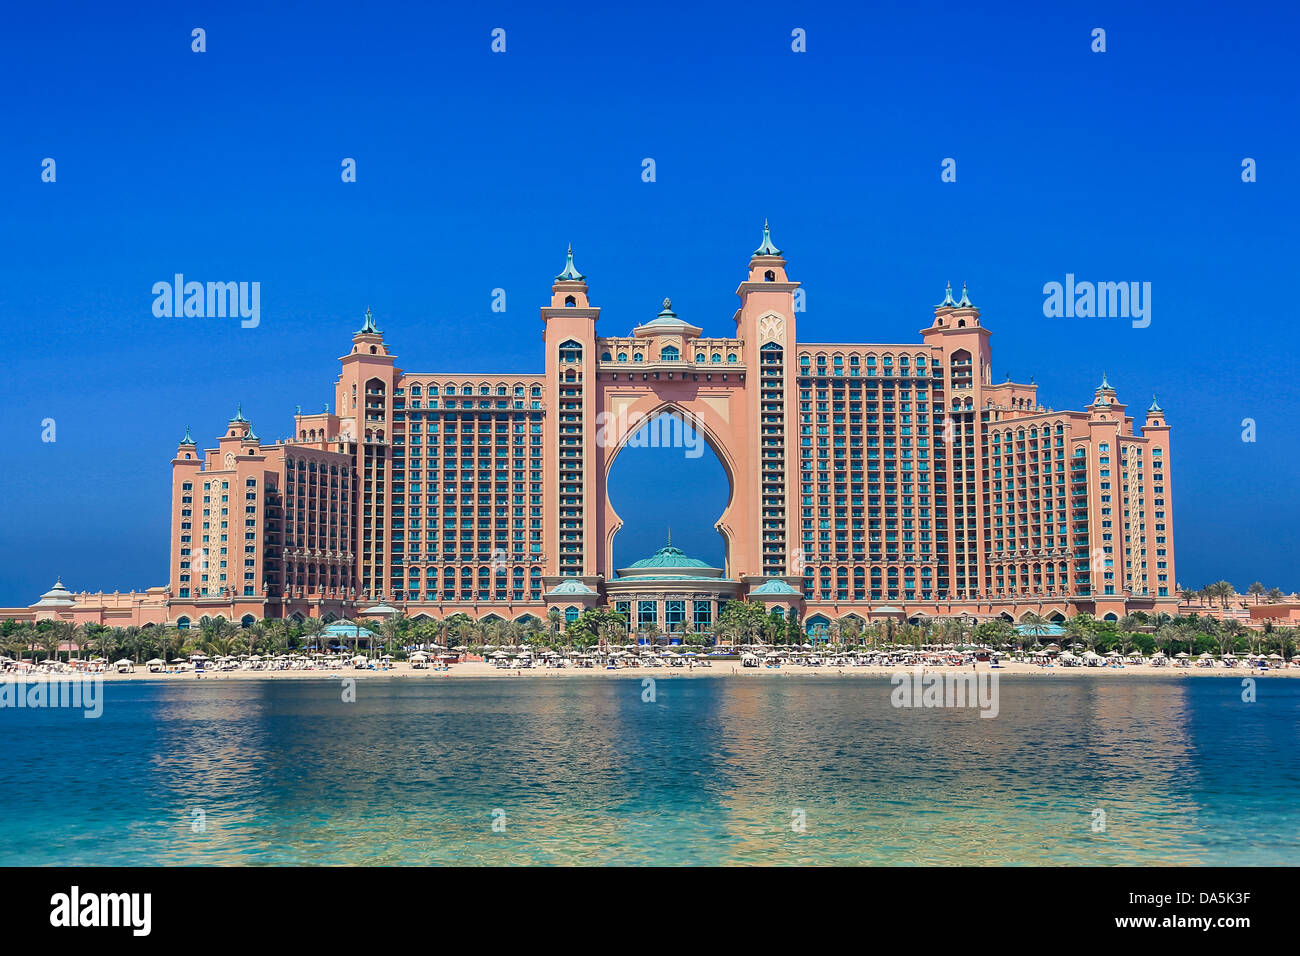 United Arab Emirates, UAE, Dubai, City, Jumeirah, Palm Jumeirah, Atlantis, Building, arch, Atlantis, beach, famous, hotel, palm, Stock Photo